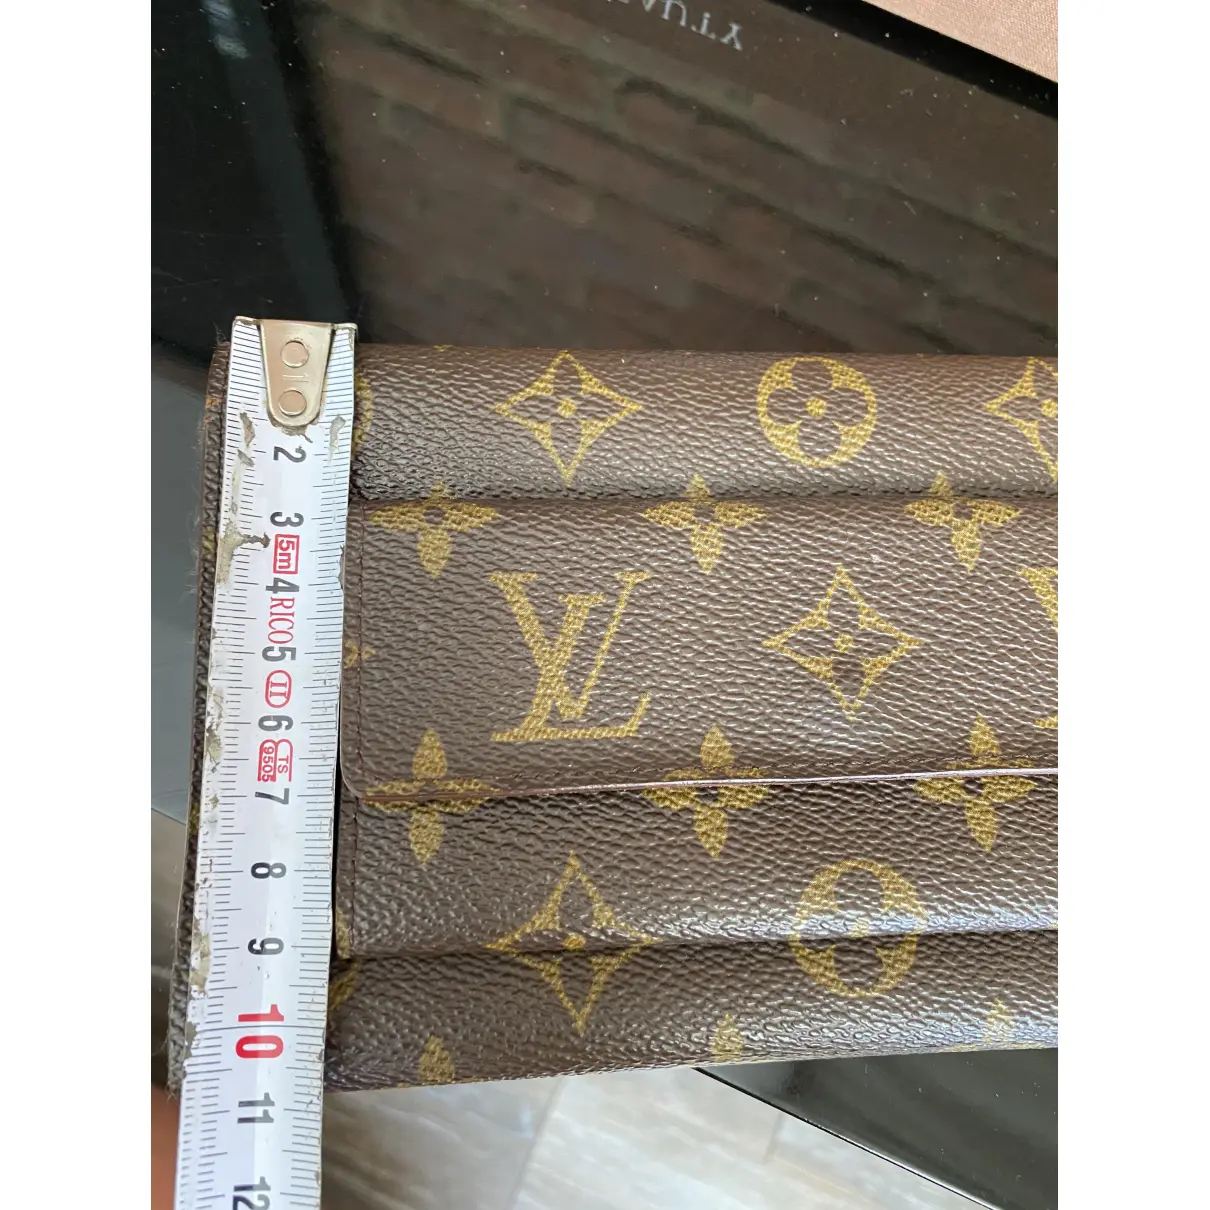 Buy Louis Vuitton Virtuose cloth wallet online